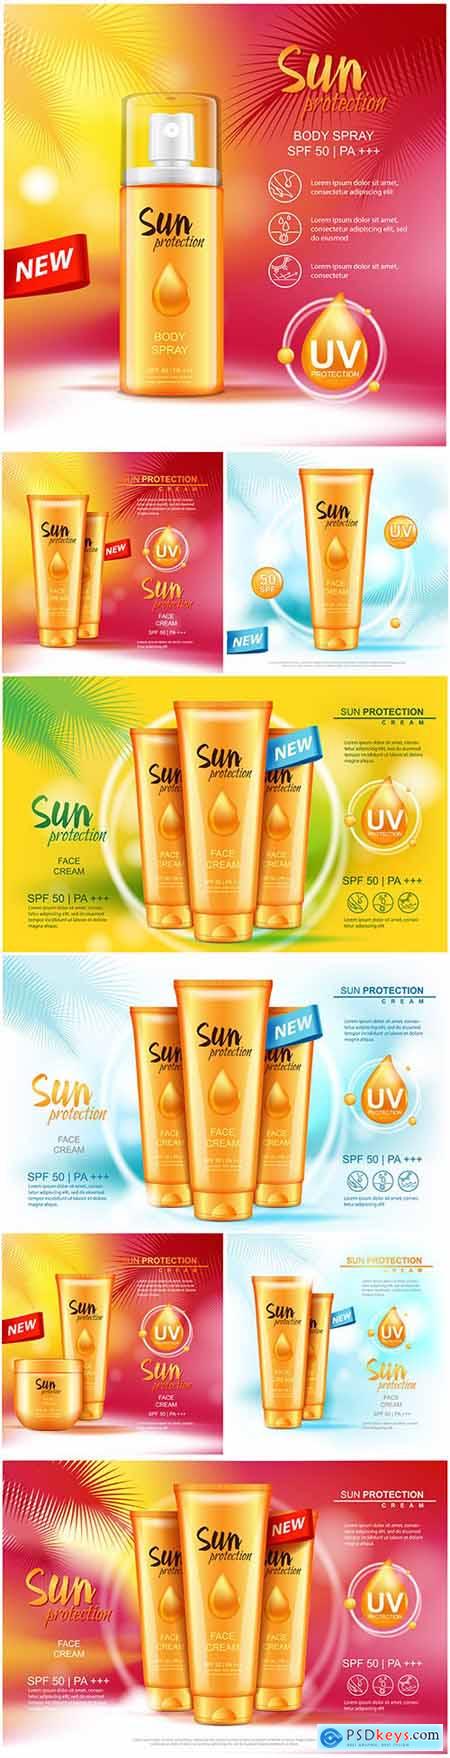 Sunscreen cosmetics illustration template advertising